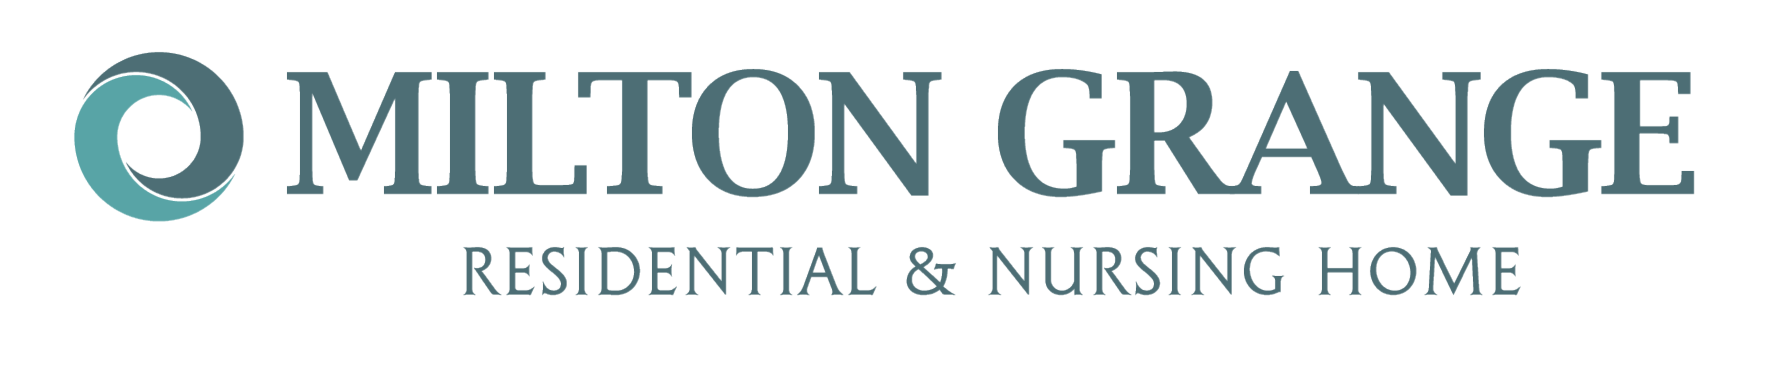 Milton Grange Care Home logo